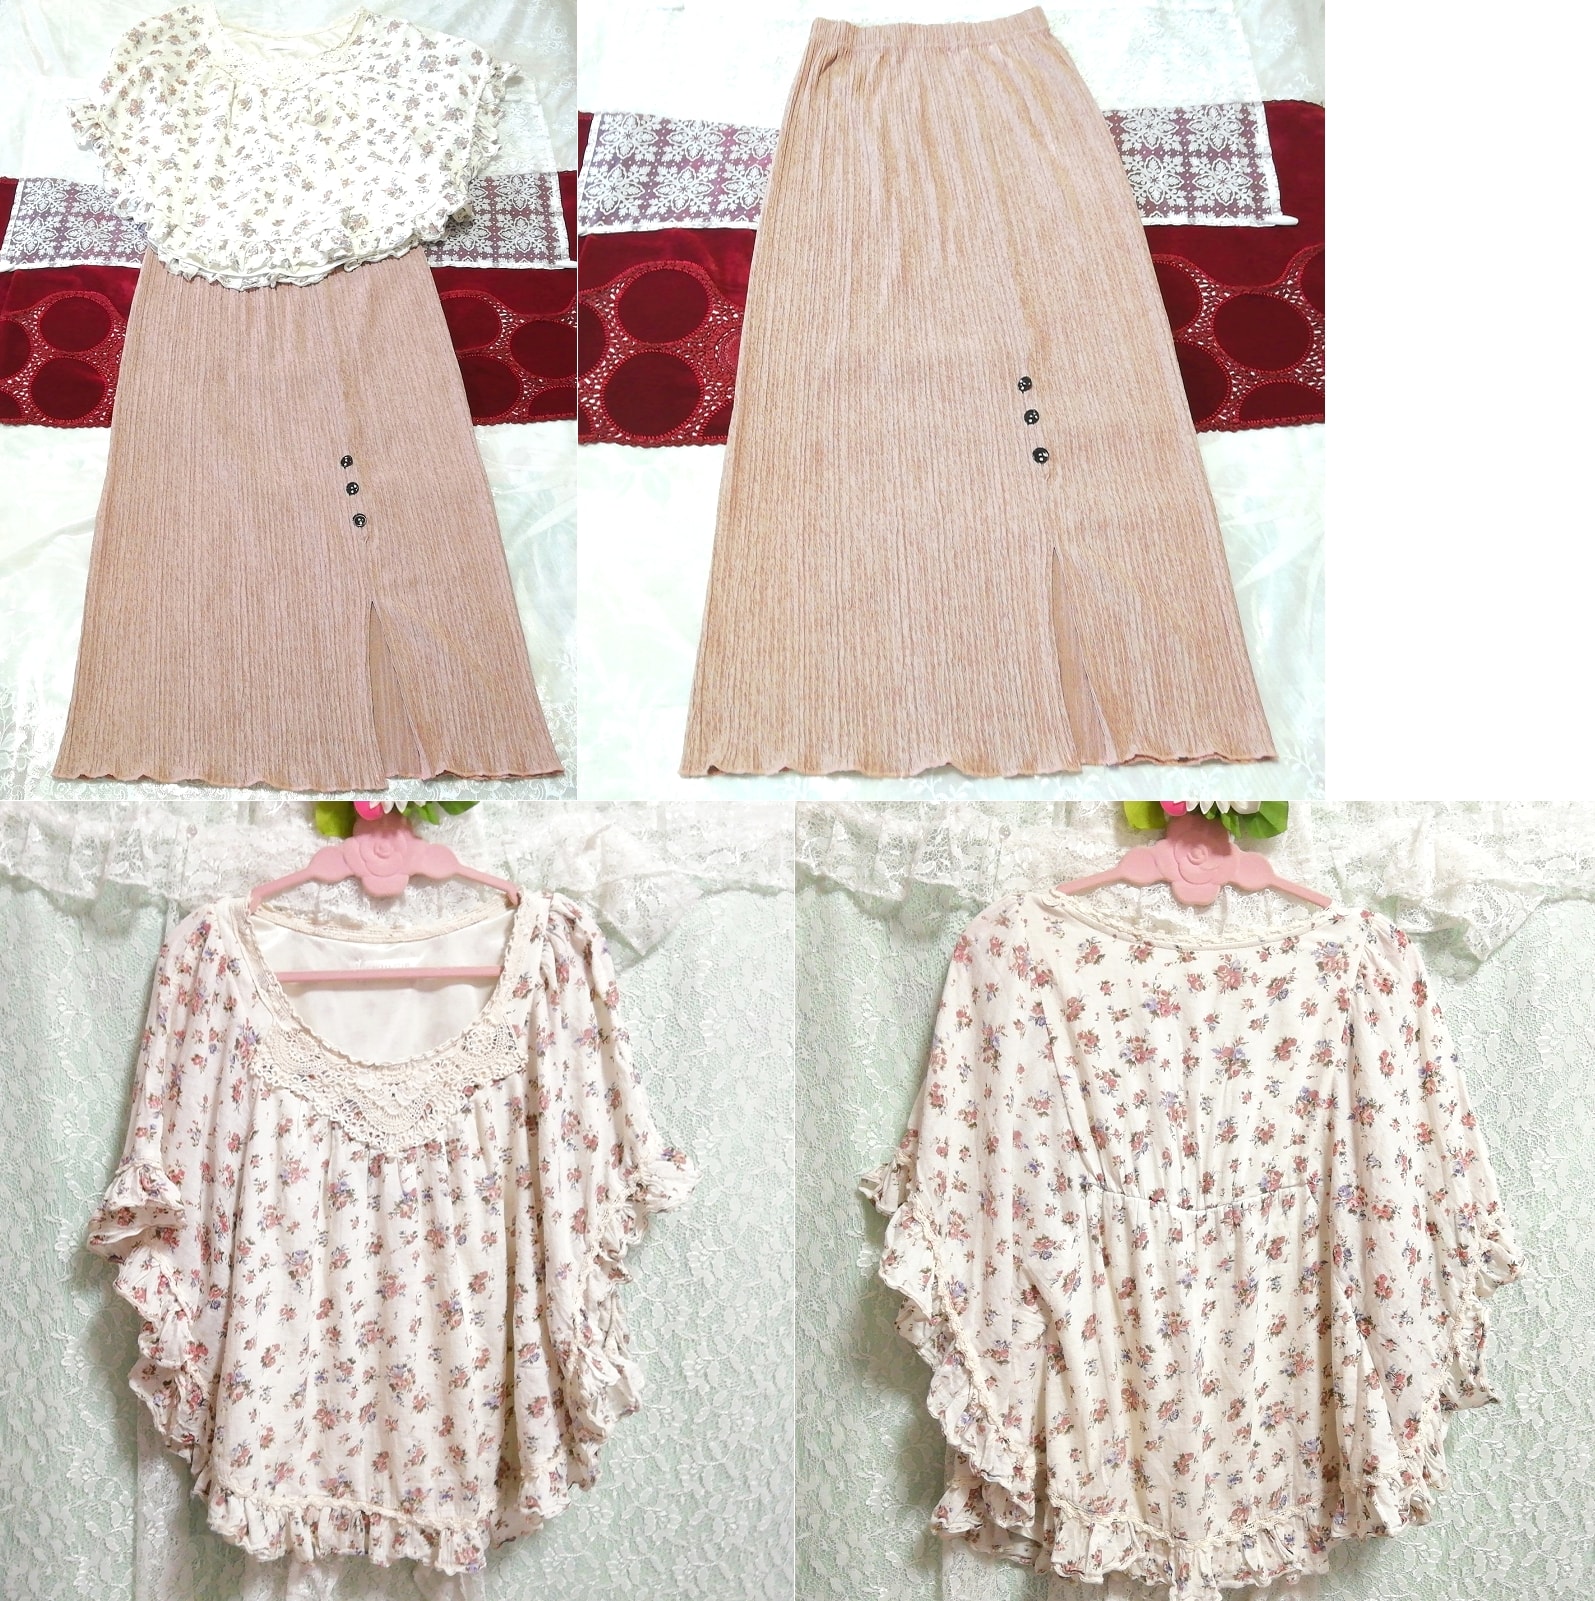 White cotton floral pattern poncho tunic negligee nightgown pink beige maxi skirt 2P, fashion, ladies' fashion, nightwear, pajamas